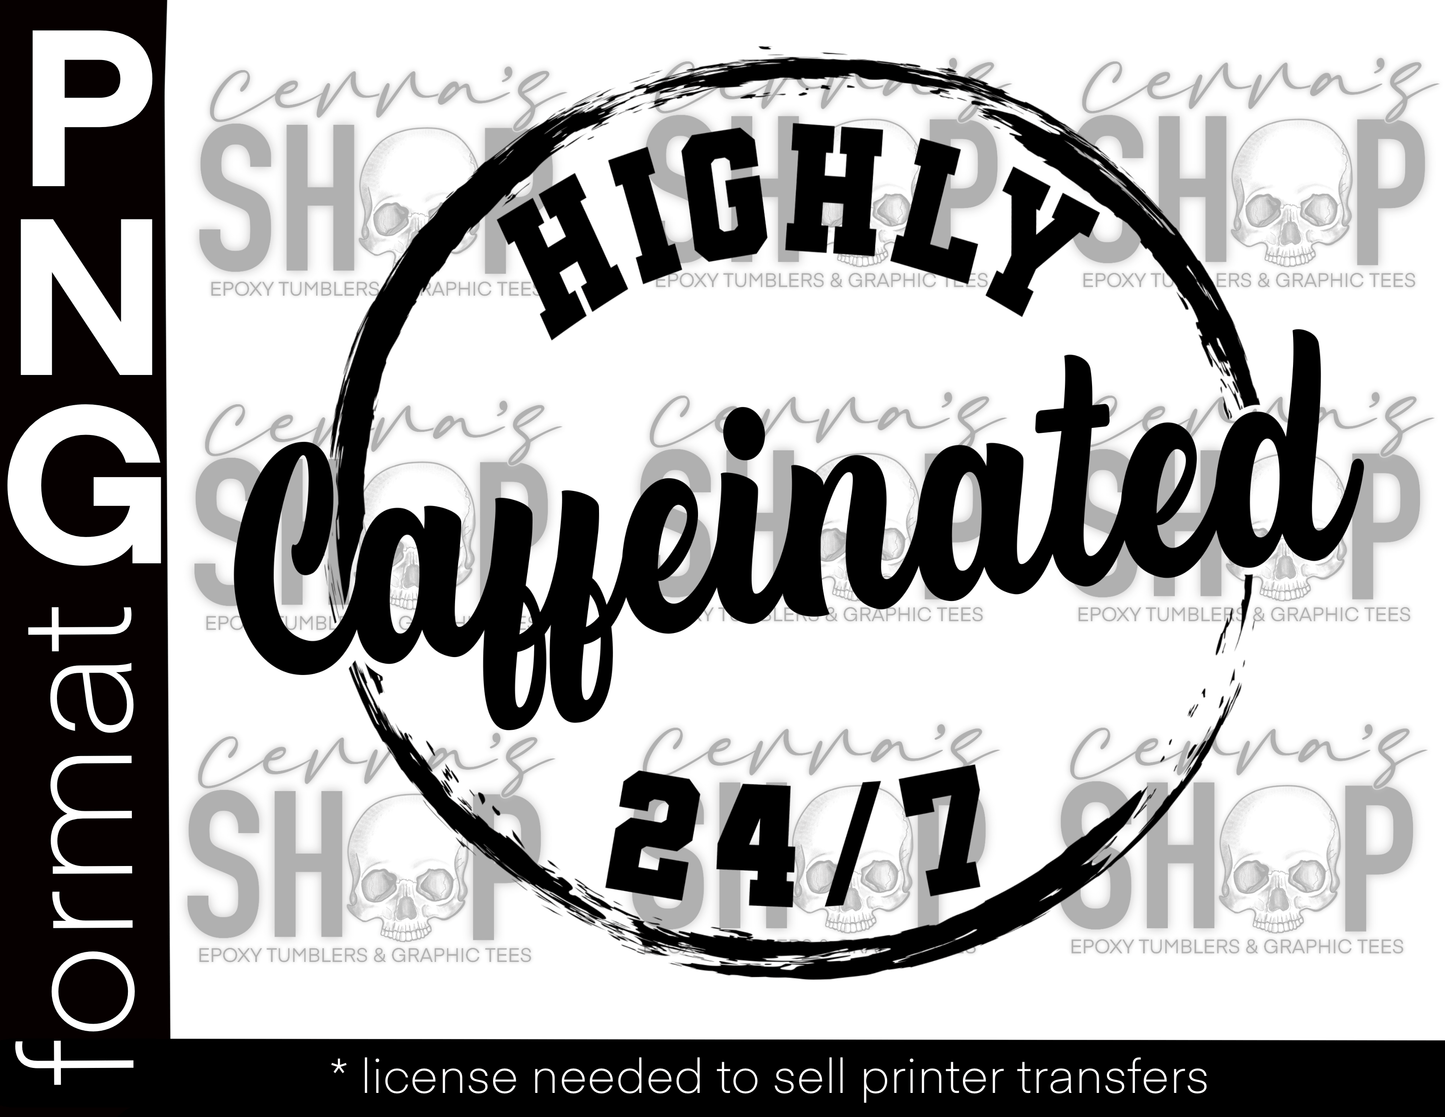 Highly caffeinated  Cerra's Shop Creates   